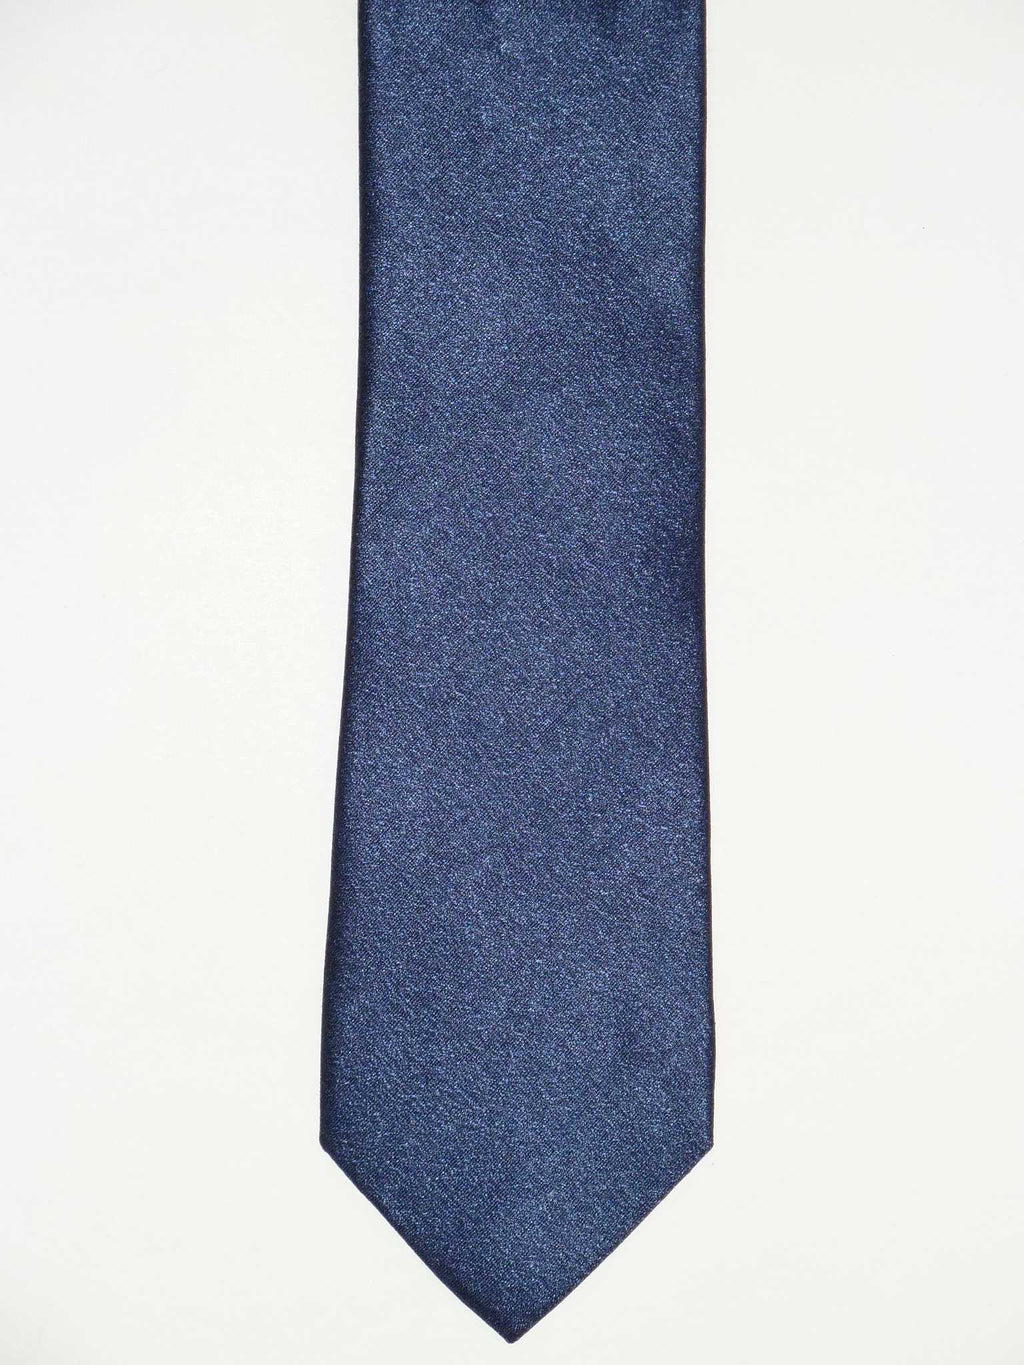 Seide, Royalblau – MAICA Krawattenfabrik 7,5cm, 100% Krawatte, Struktur, offene